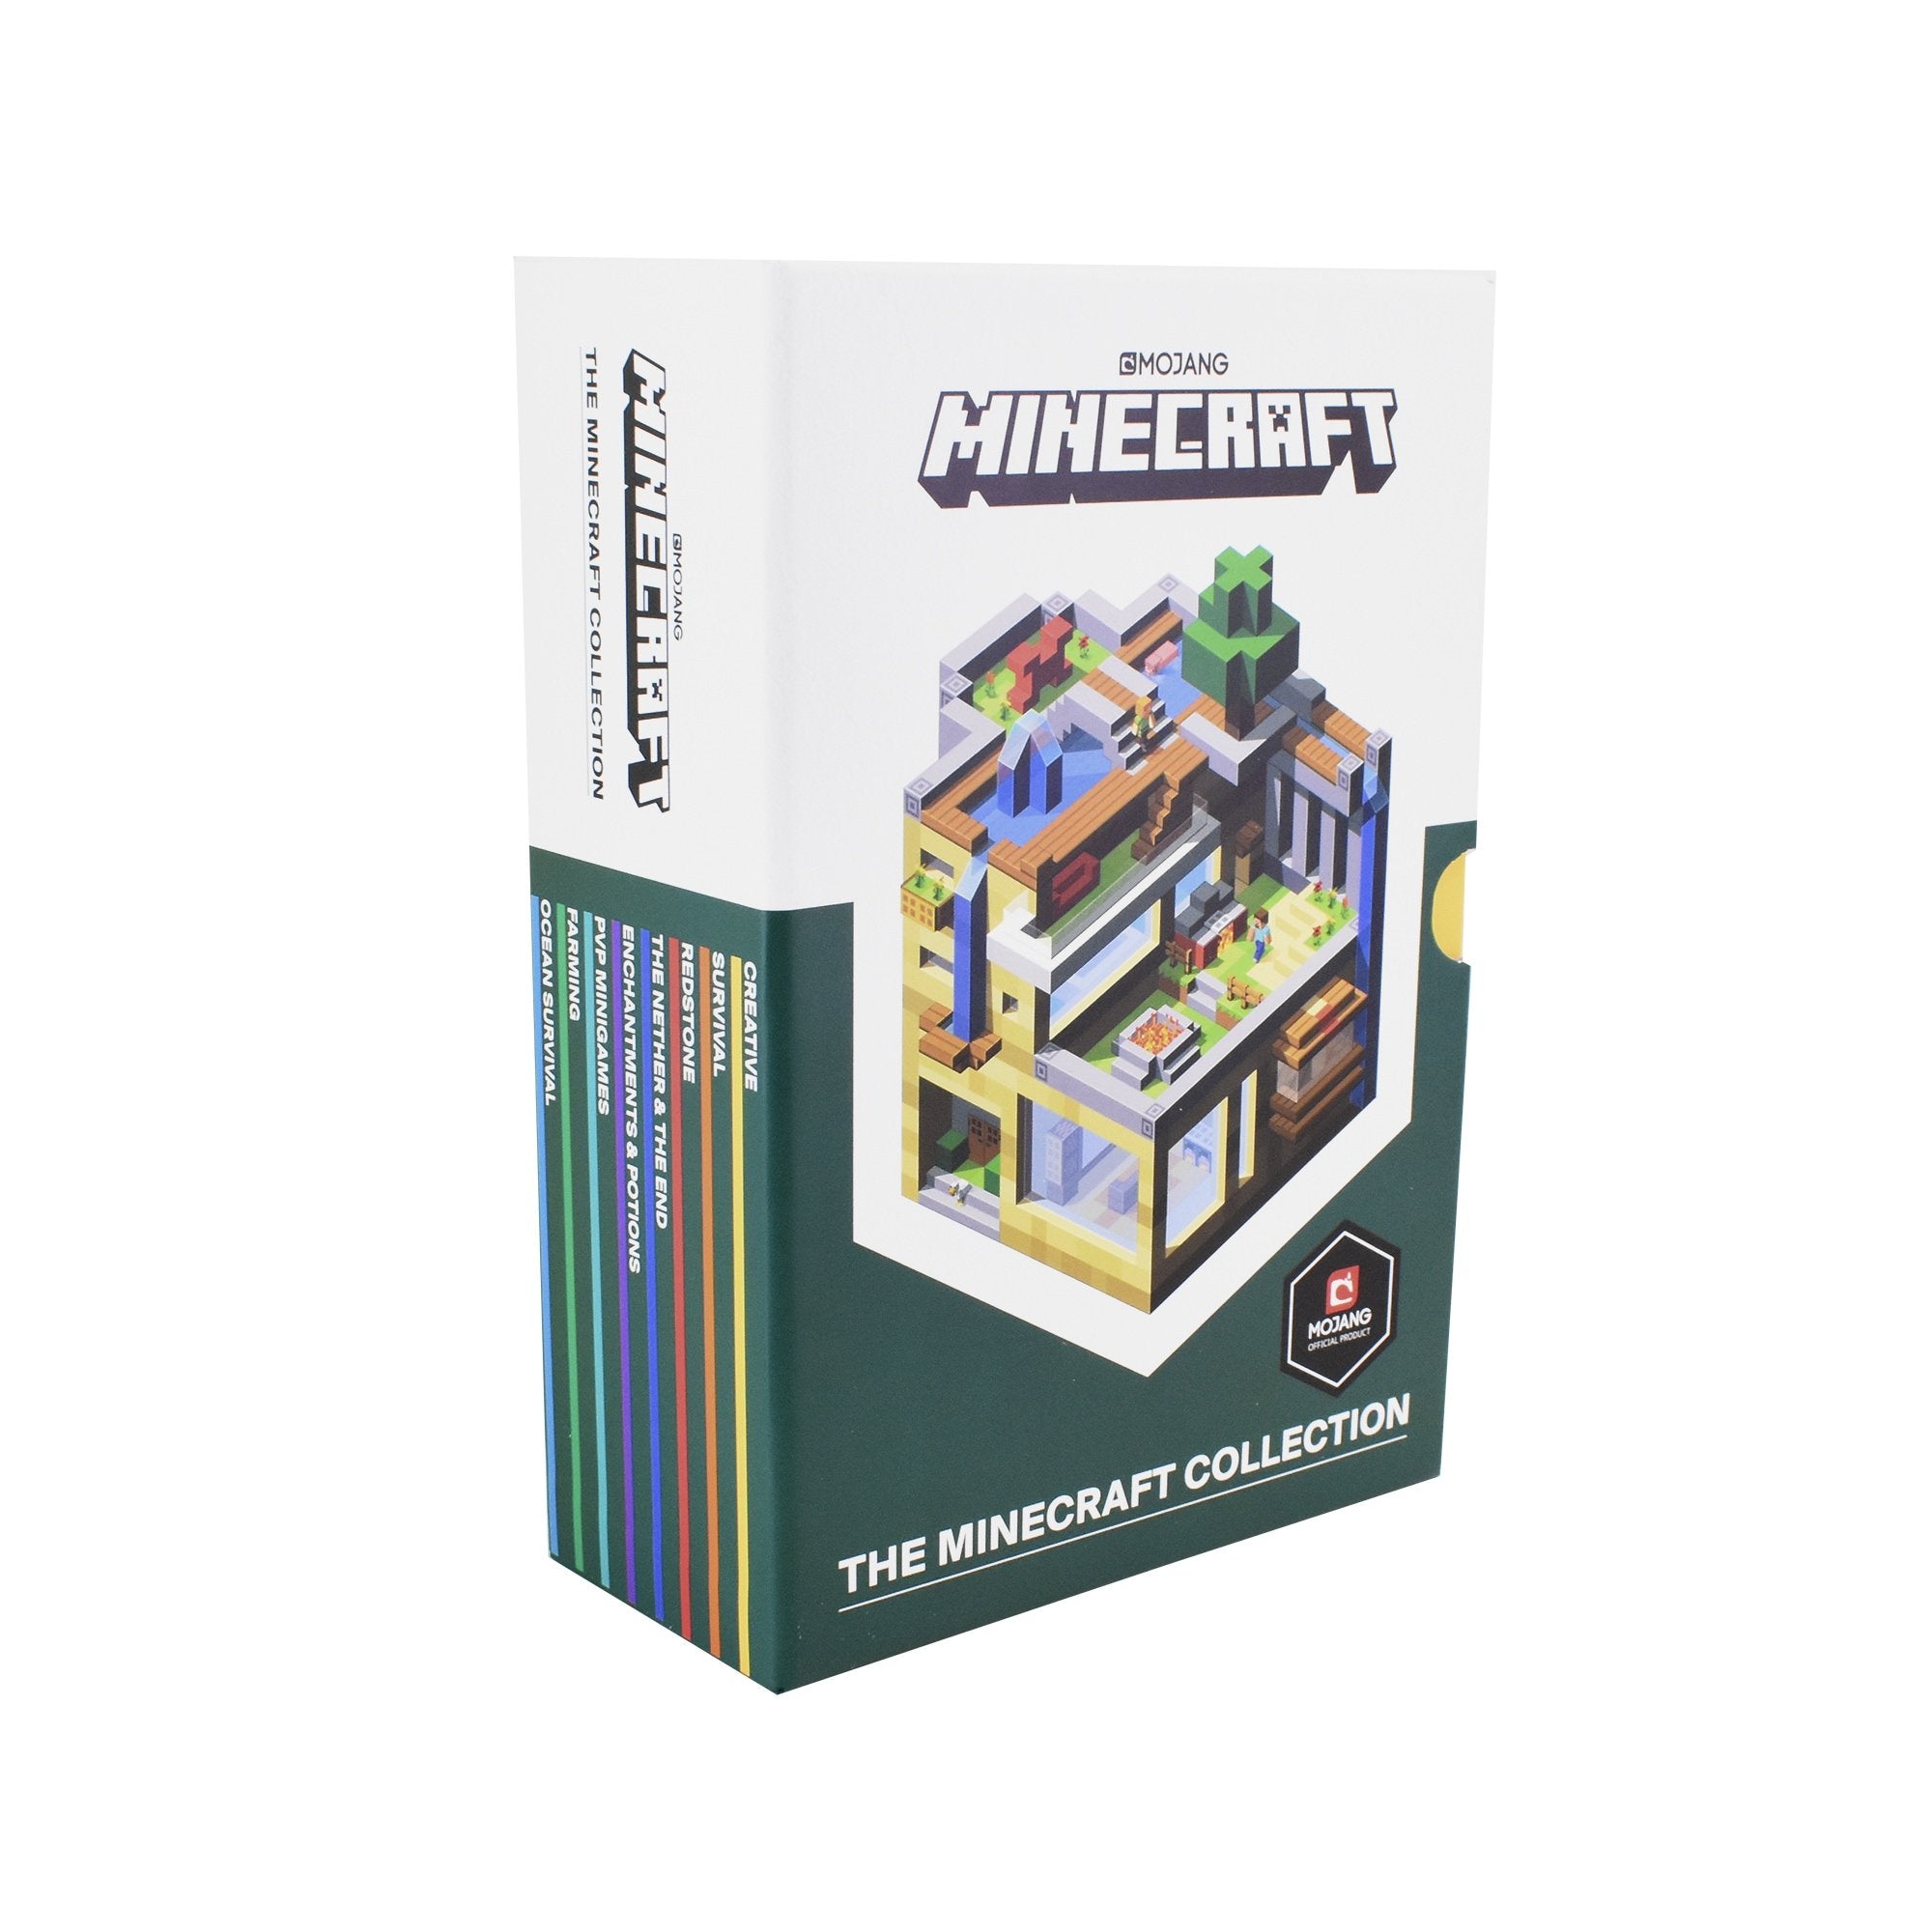 Minecraft Guides 8 Books Children Collection Set Hardback Box Set By Mojang - St Stephens Books